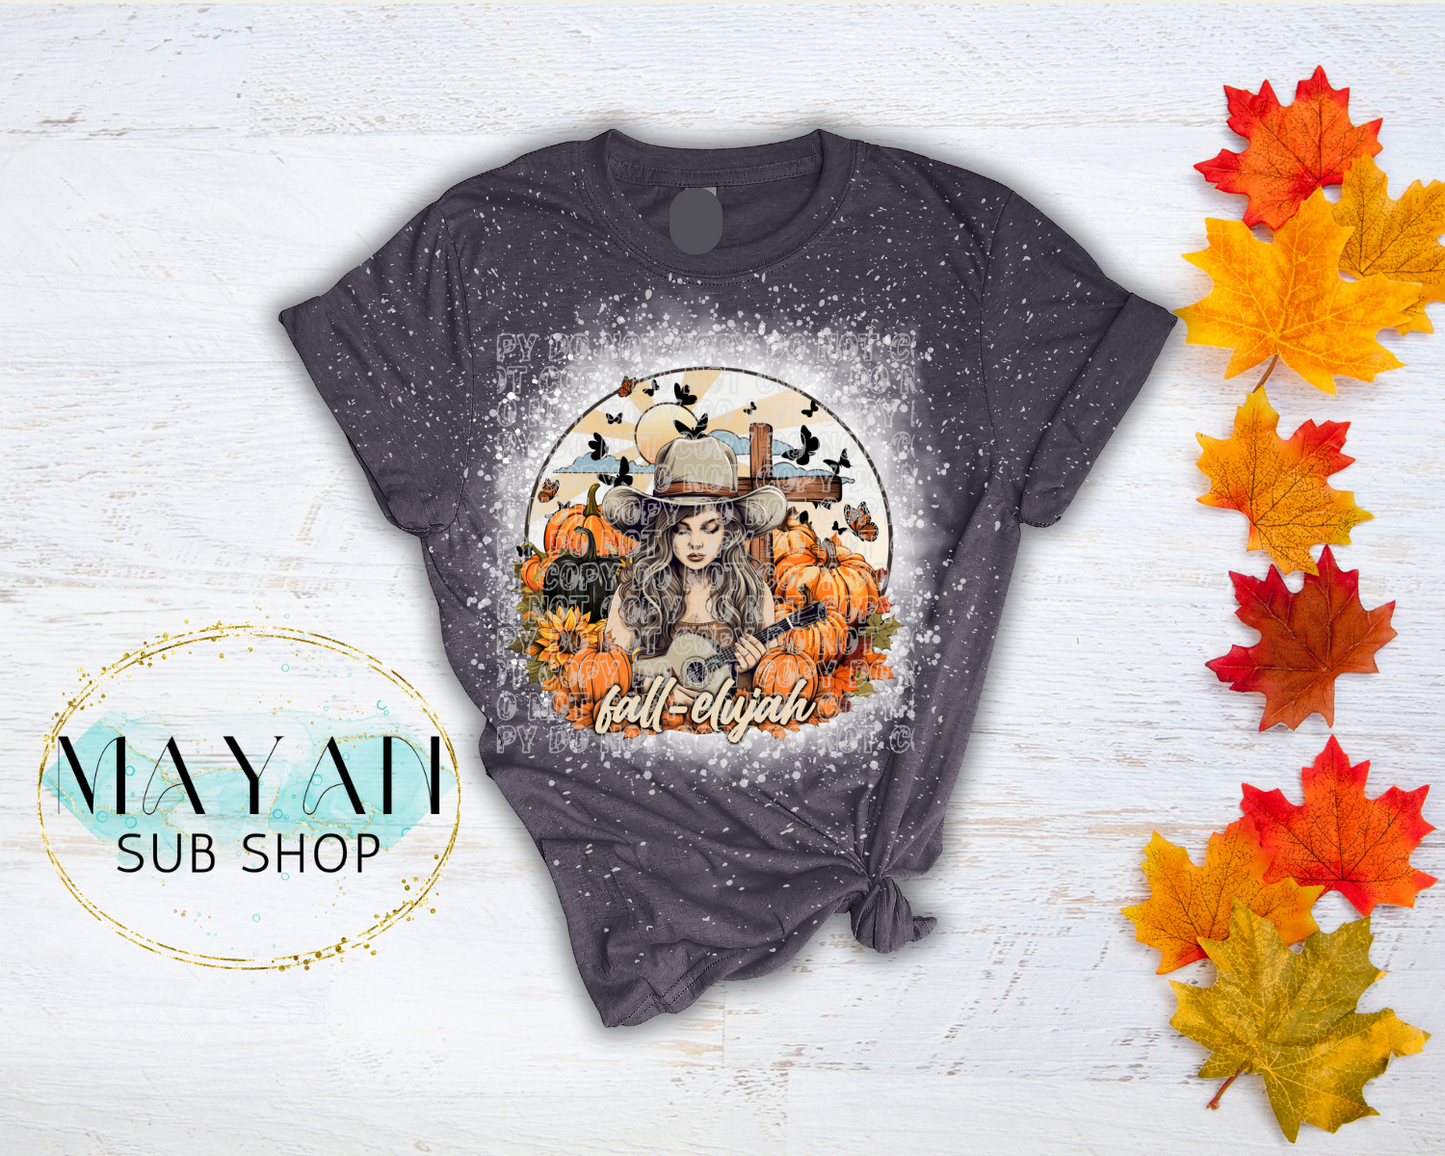 Fall-elujah Bleached Shirt - Mayan Sub Shop